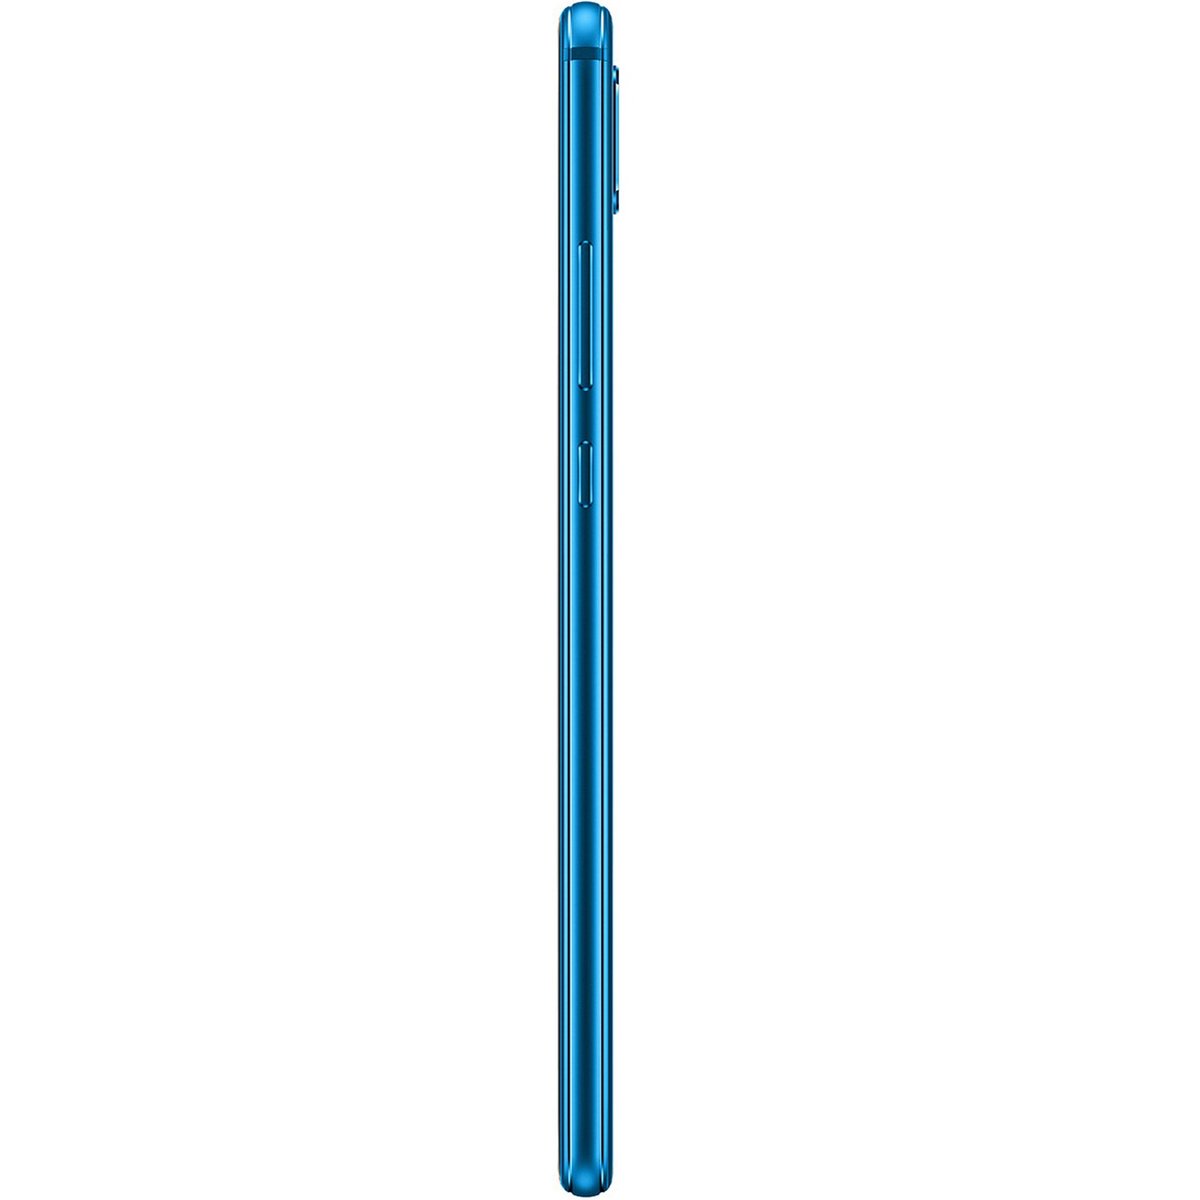 Huawei nova 3e 64GB 4G Blue